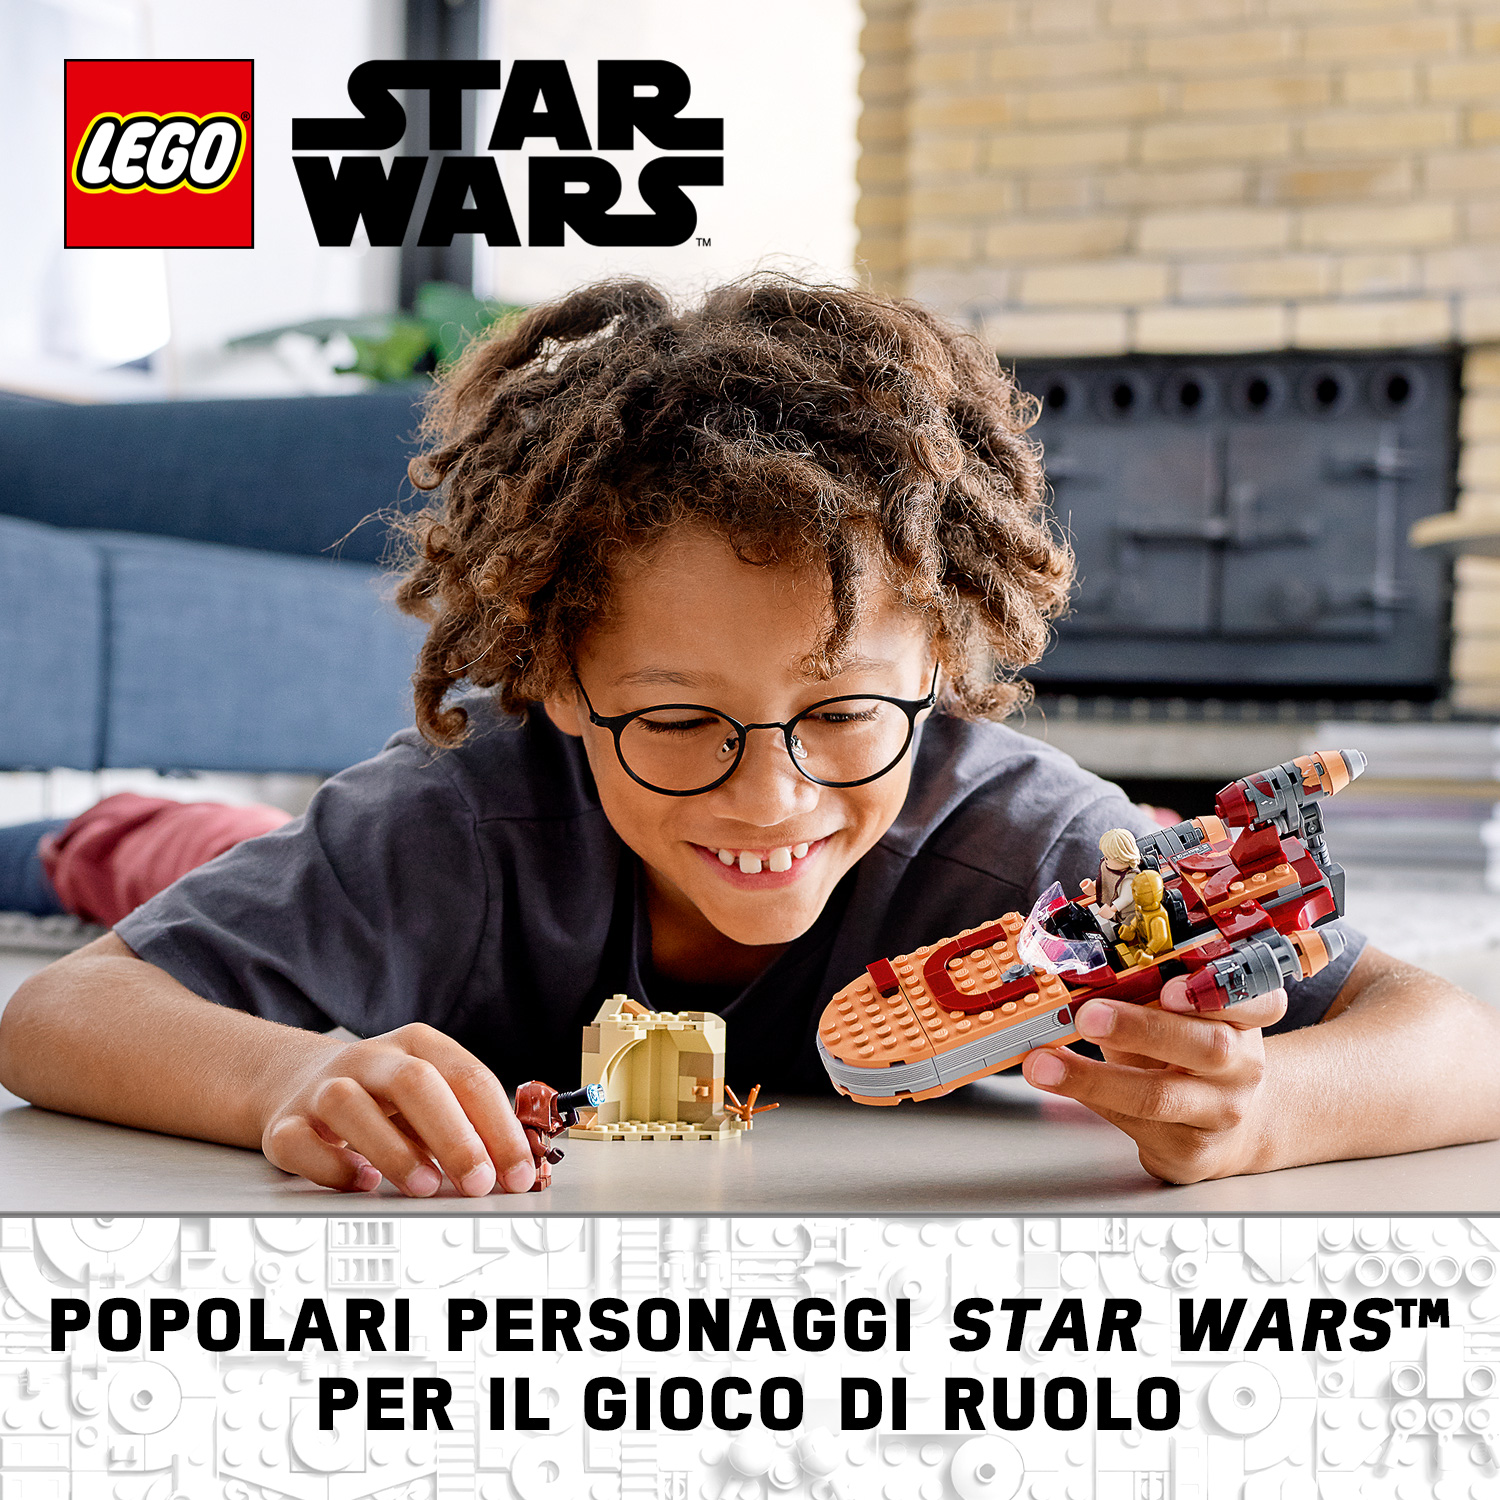 Lego Star Wars 75271 Landspeeder Di Luke Skywalker 75271, , large